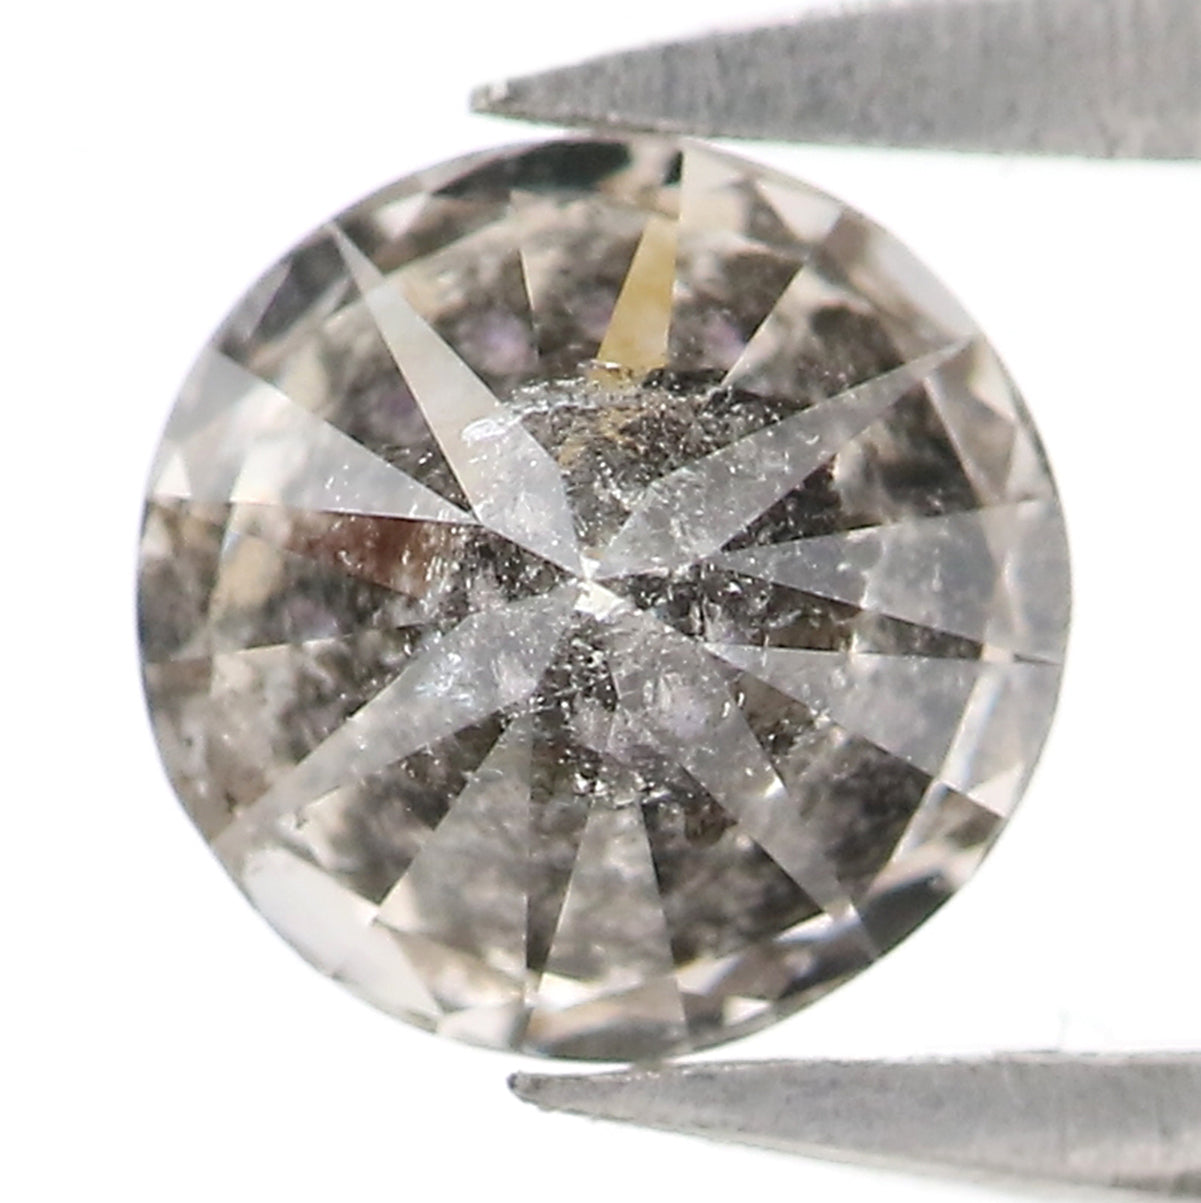 Natural Loose Round Salt And Pepper Diamond Black Grey Color 0.41 CT 4.68 MM Round Brilliant Cut Diamond L2566